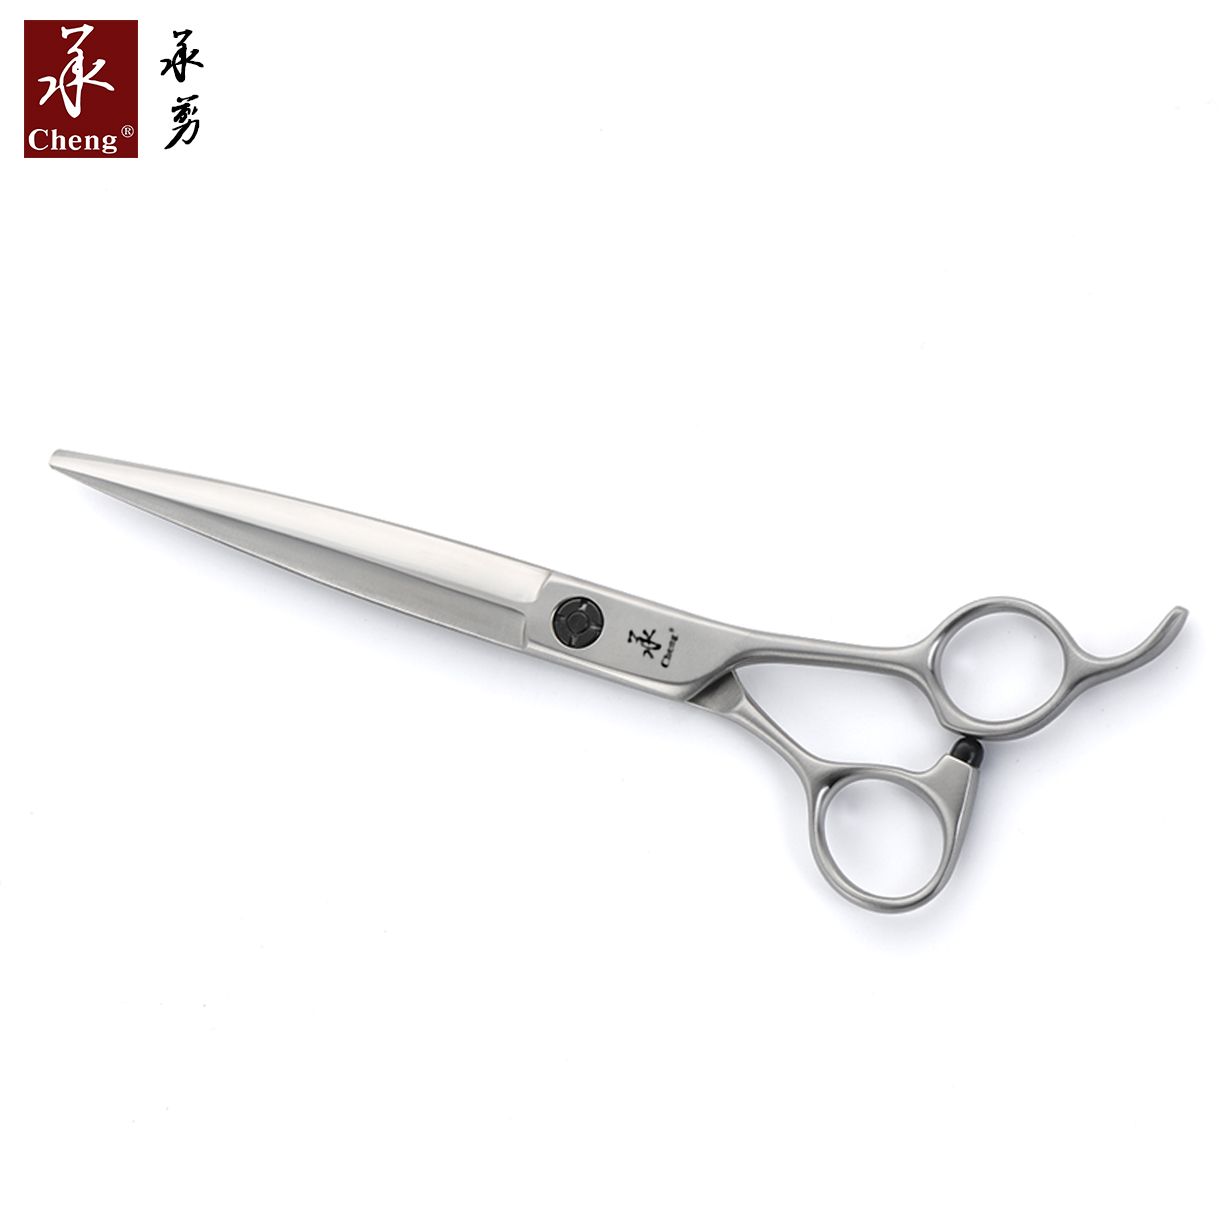 AAS-5.8TT Hair Scissors 5.8Inch Double Sword Blades CNC